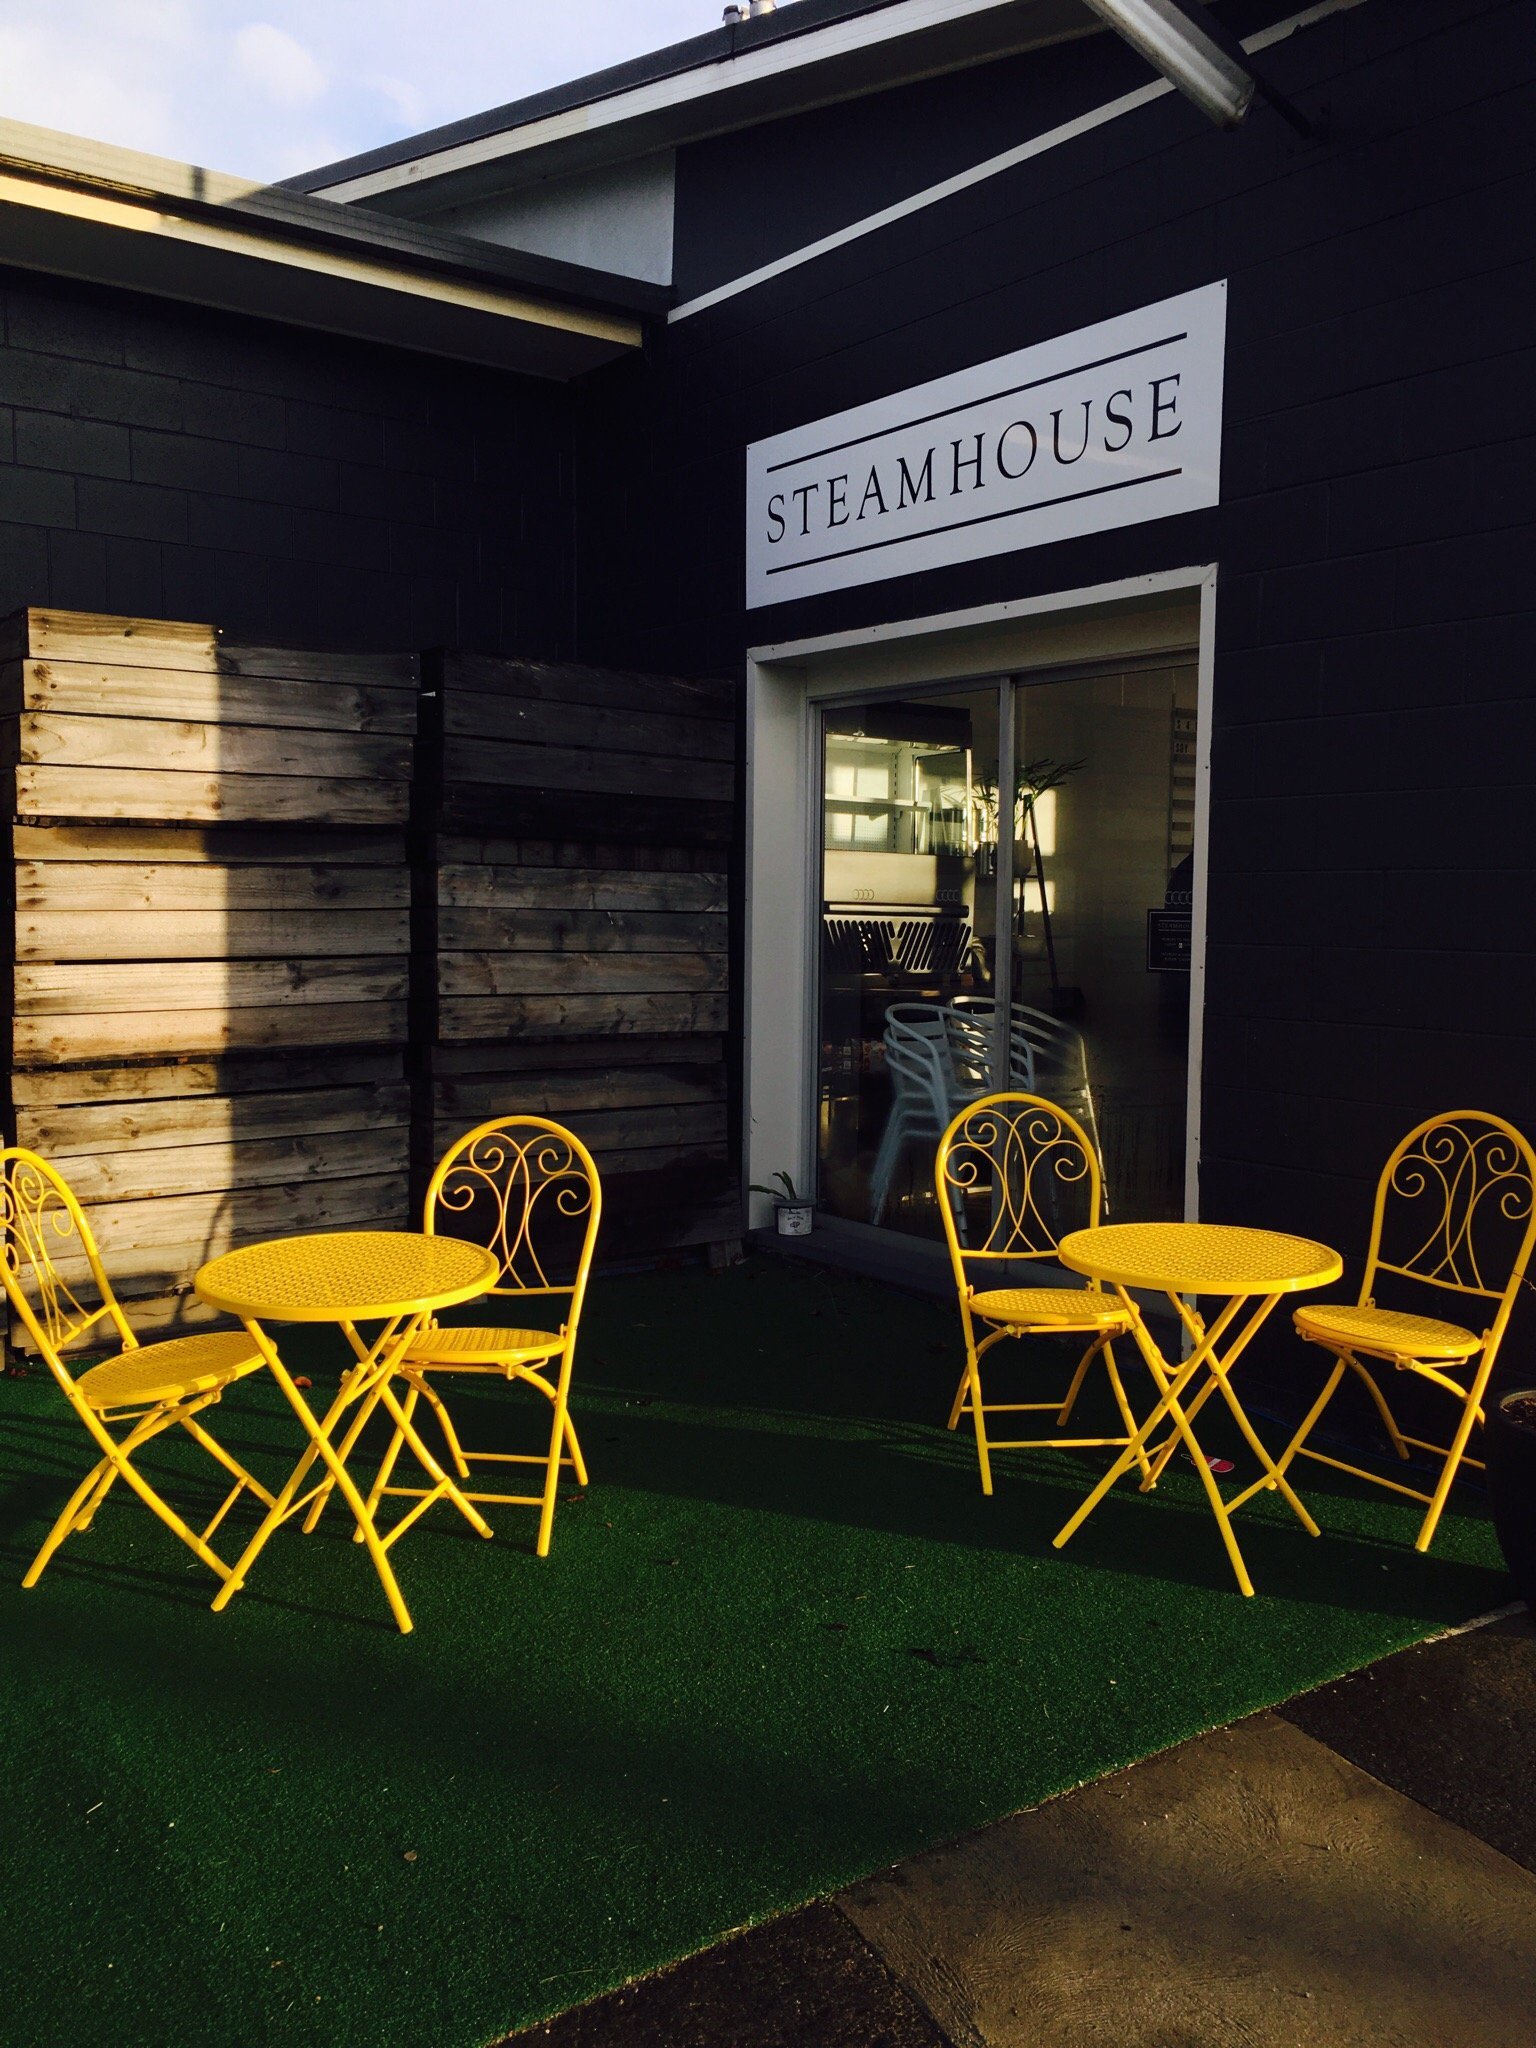 Steamhouse Cafe - Restaurants Sydney 1